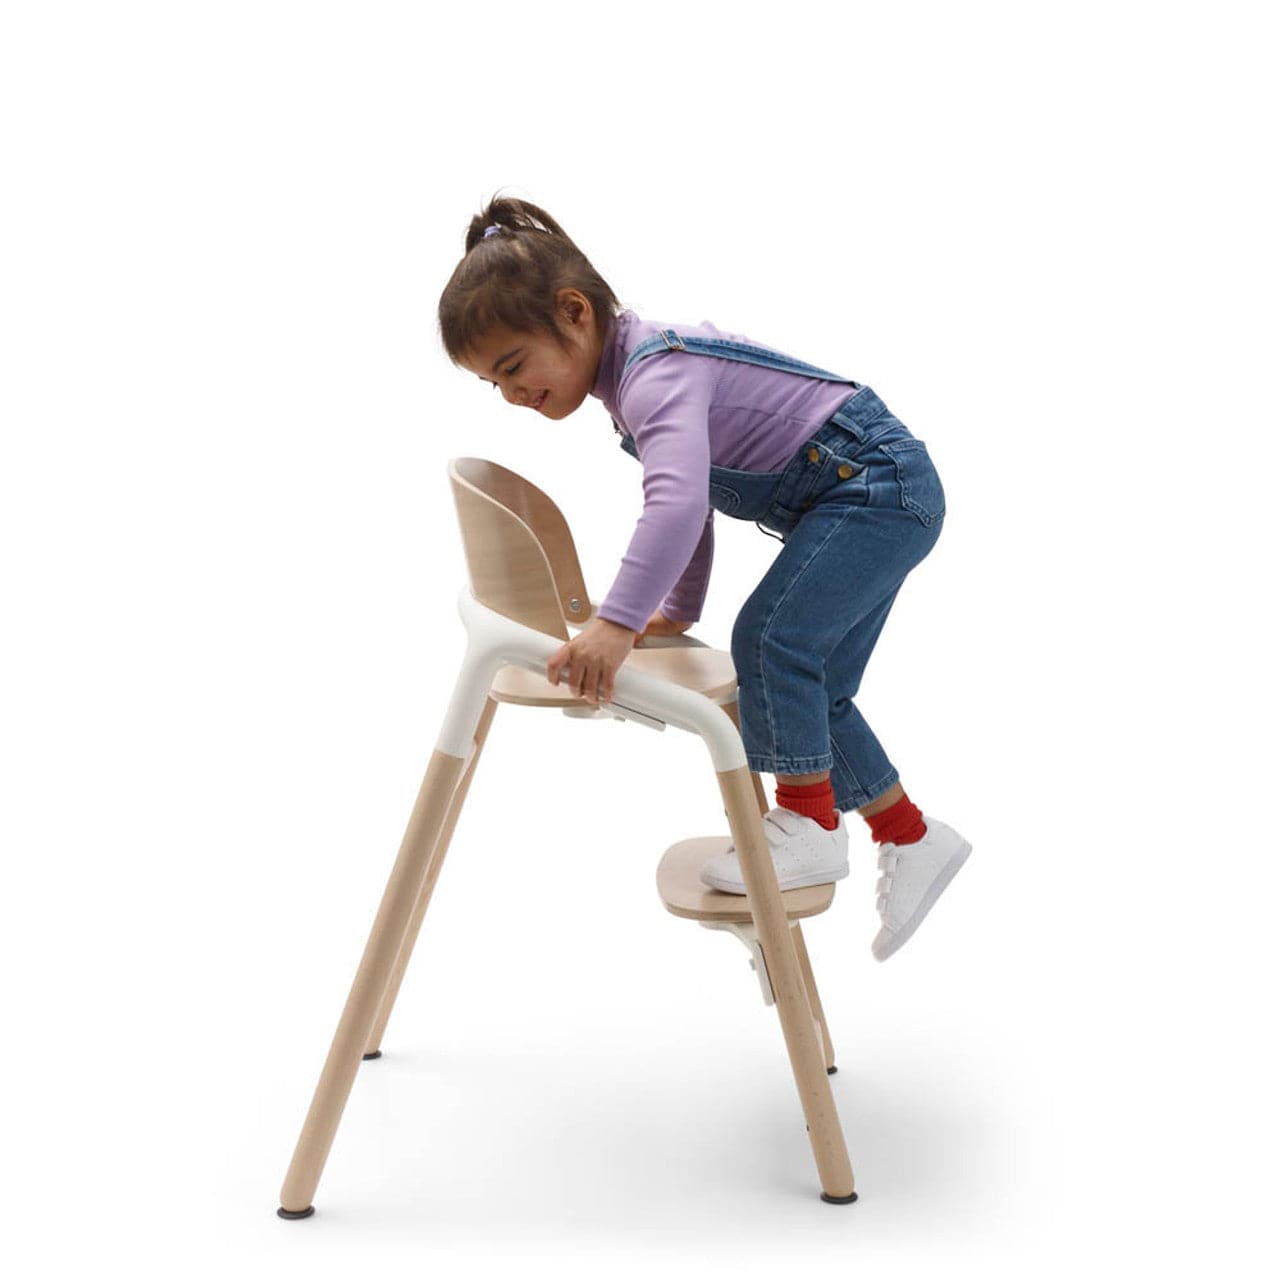 Bugaboo Giraffe Highchair + Newborn Set - Neutral Wood/White - For Your Little One